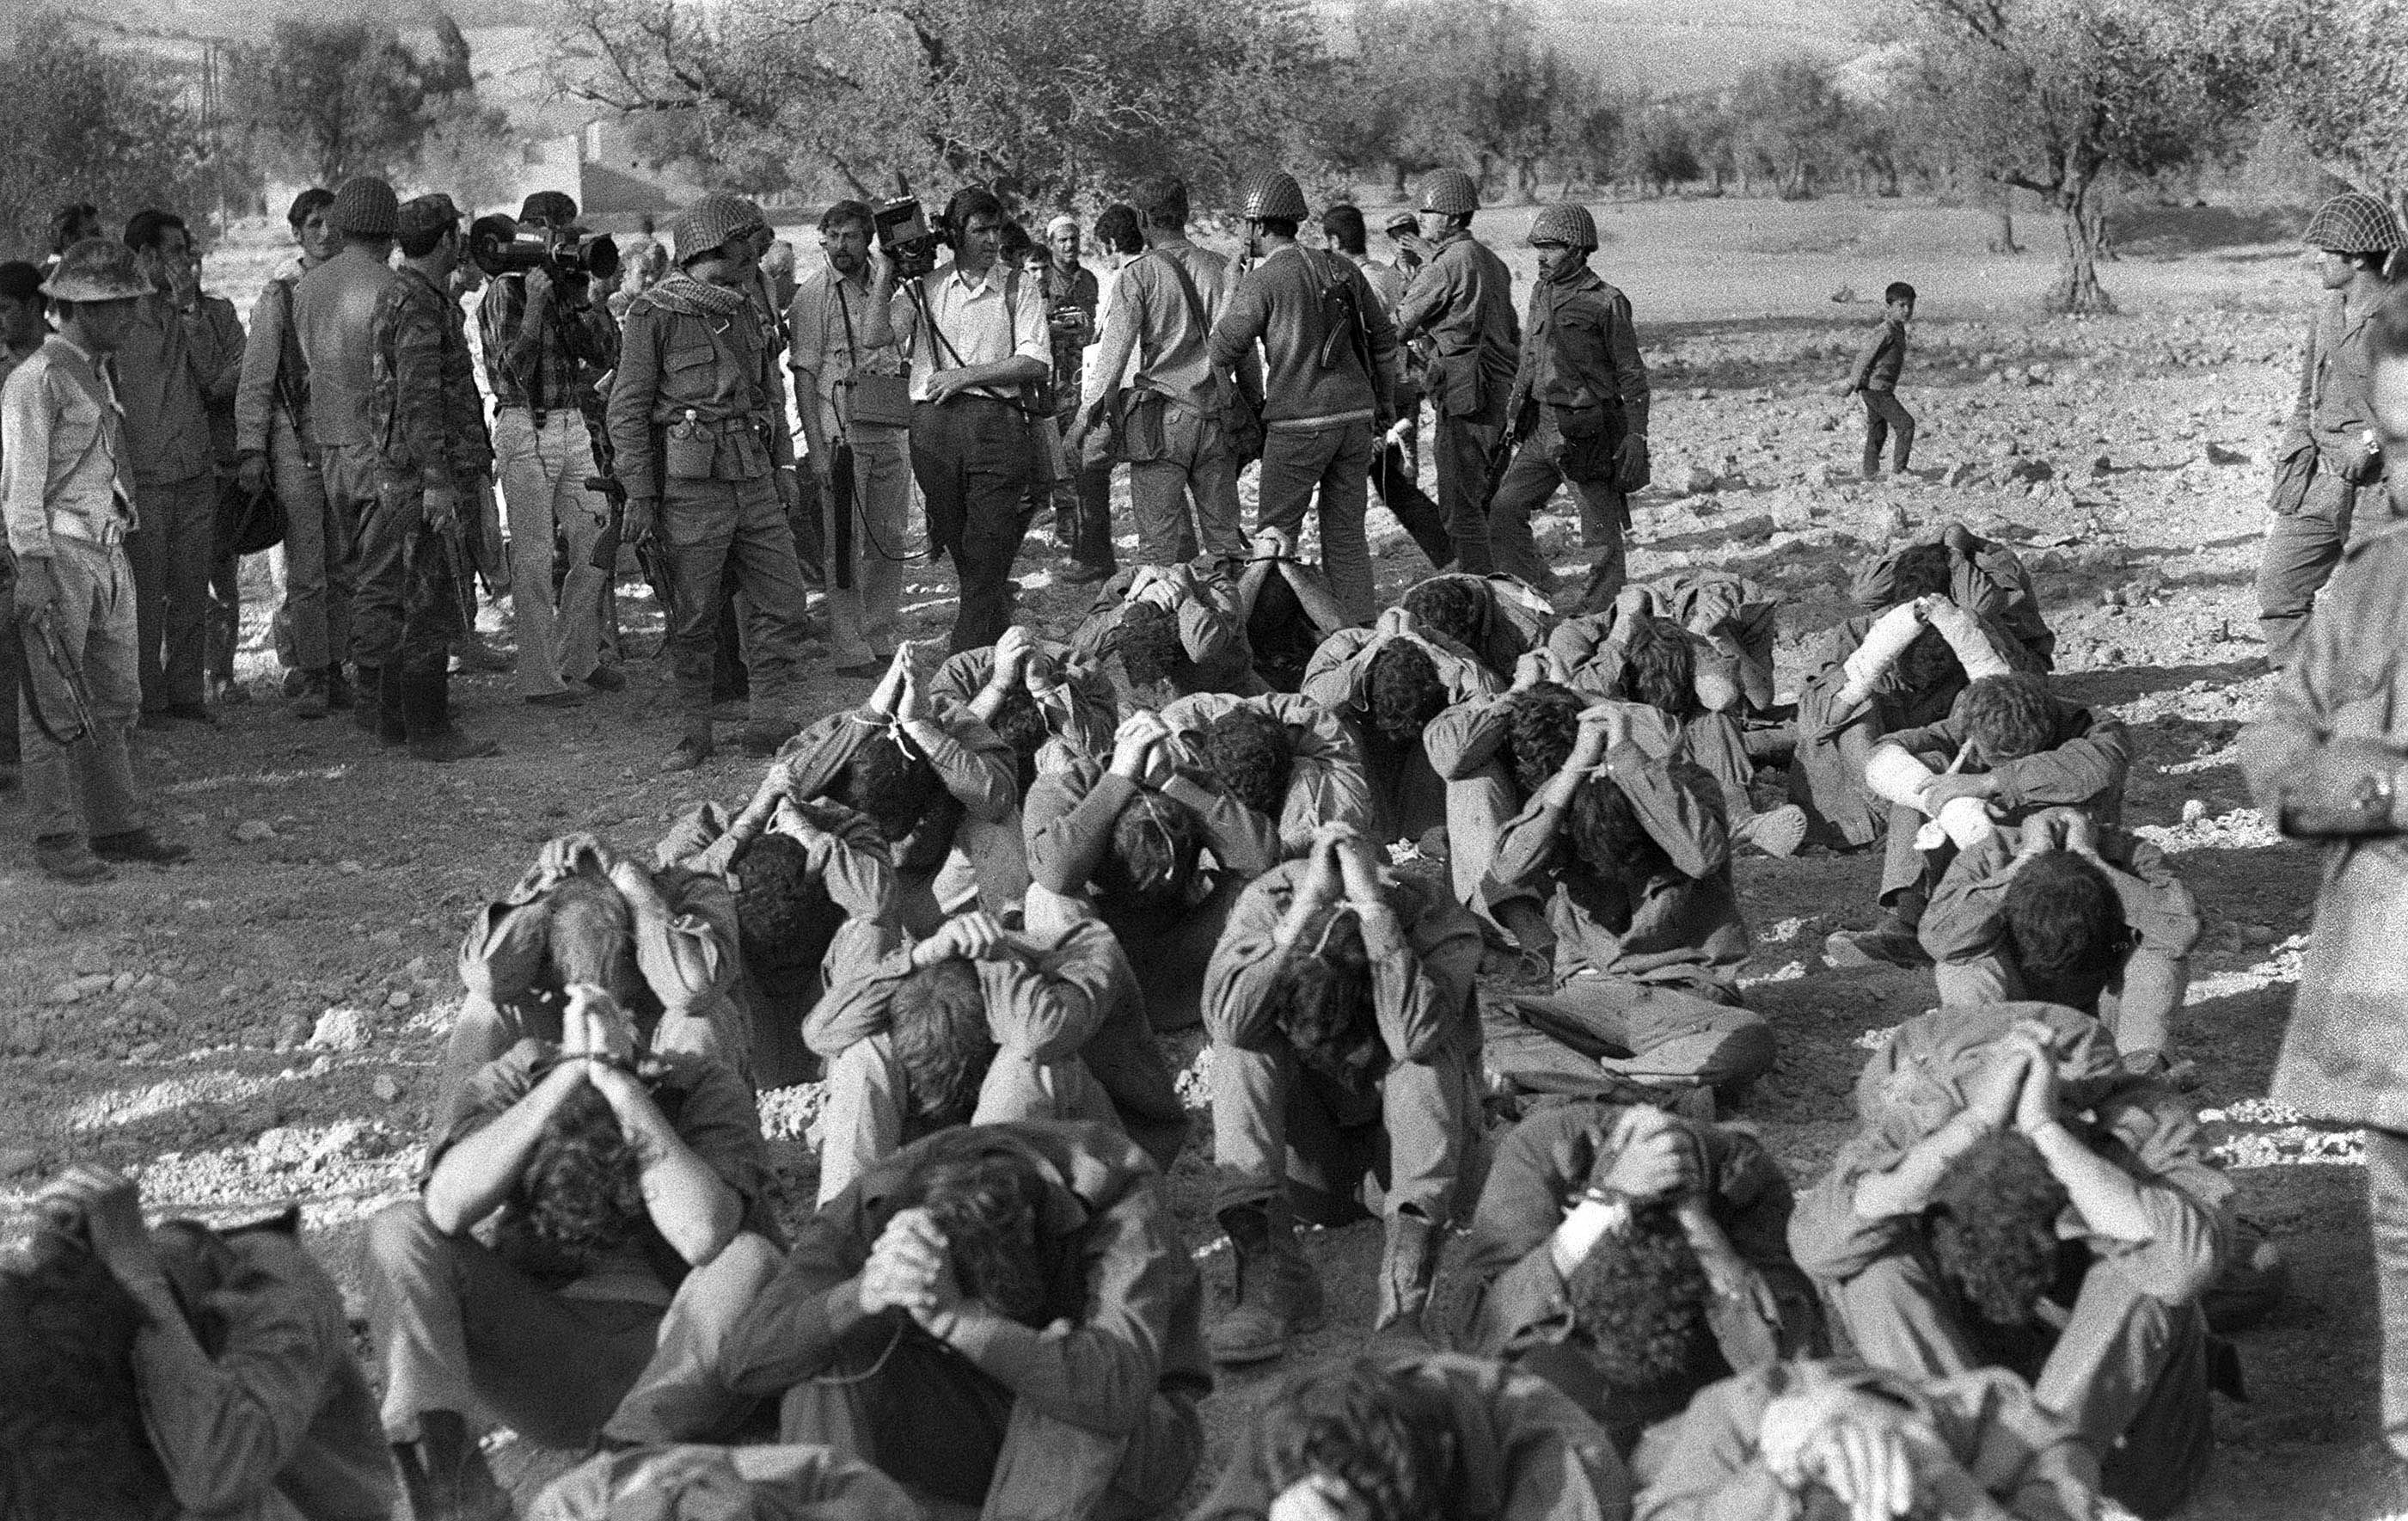 Opinion: Real lesson of Yom Kippur War? Israel's survival | CNN